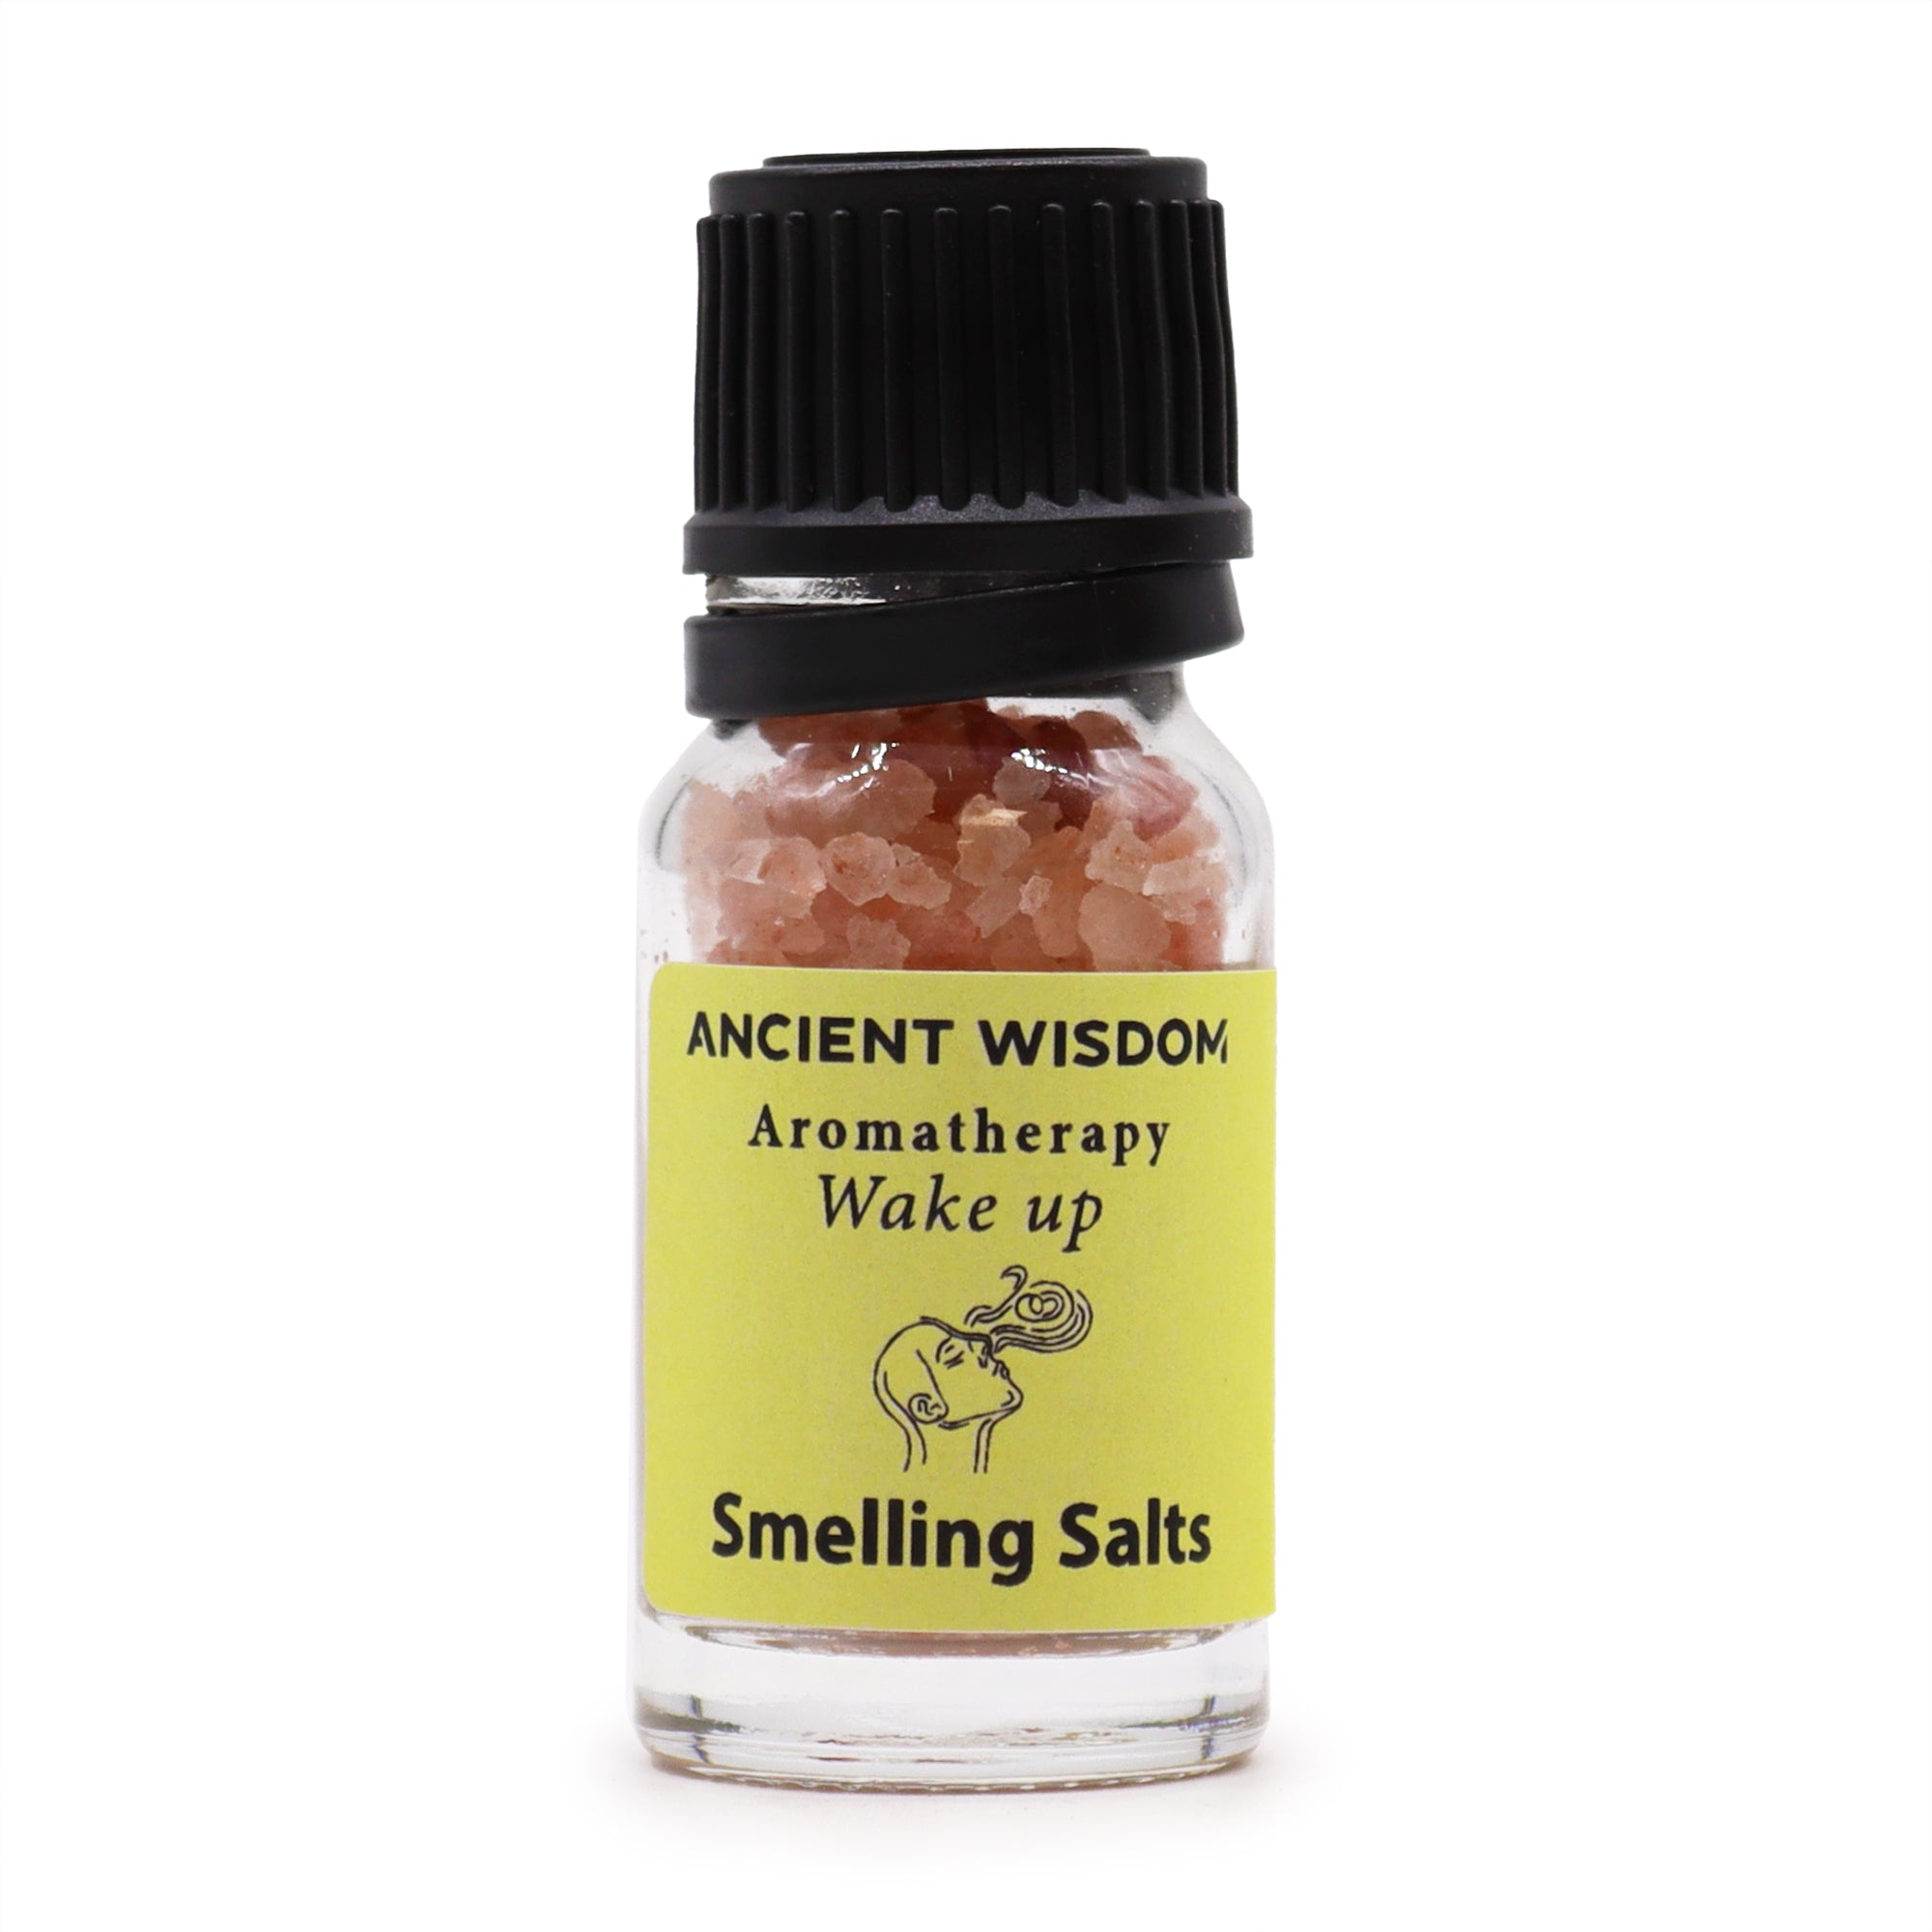 View Wake Up Aromatherapy Smelling Salt information